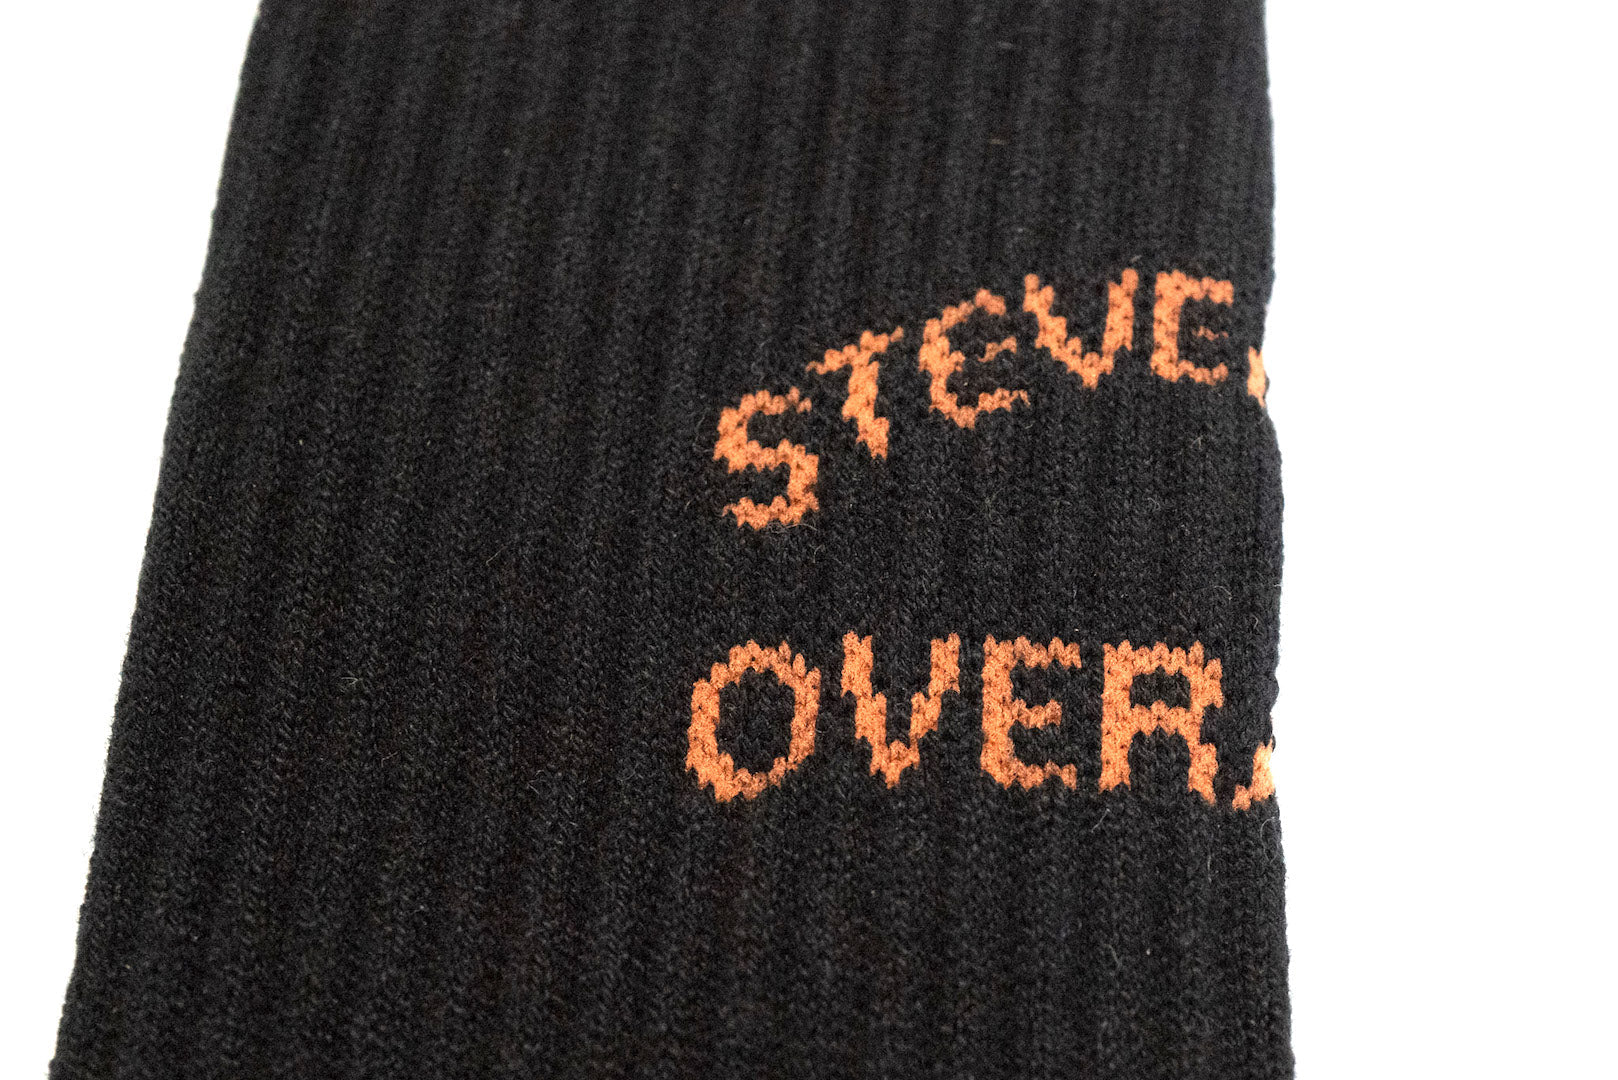 Stevenson Overall Co. 'Mid-Calf' Athletic Socks